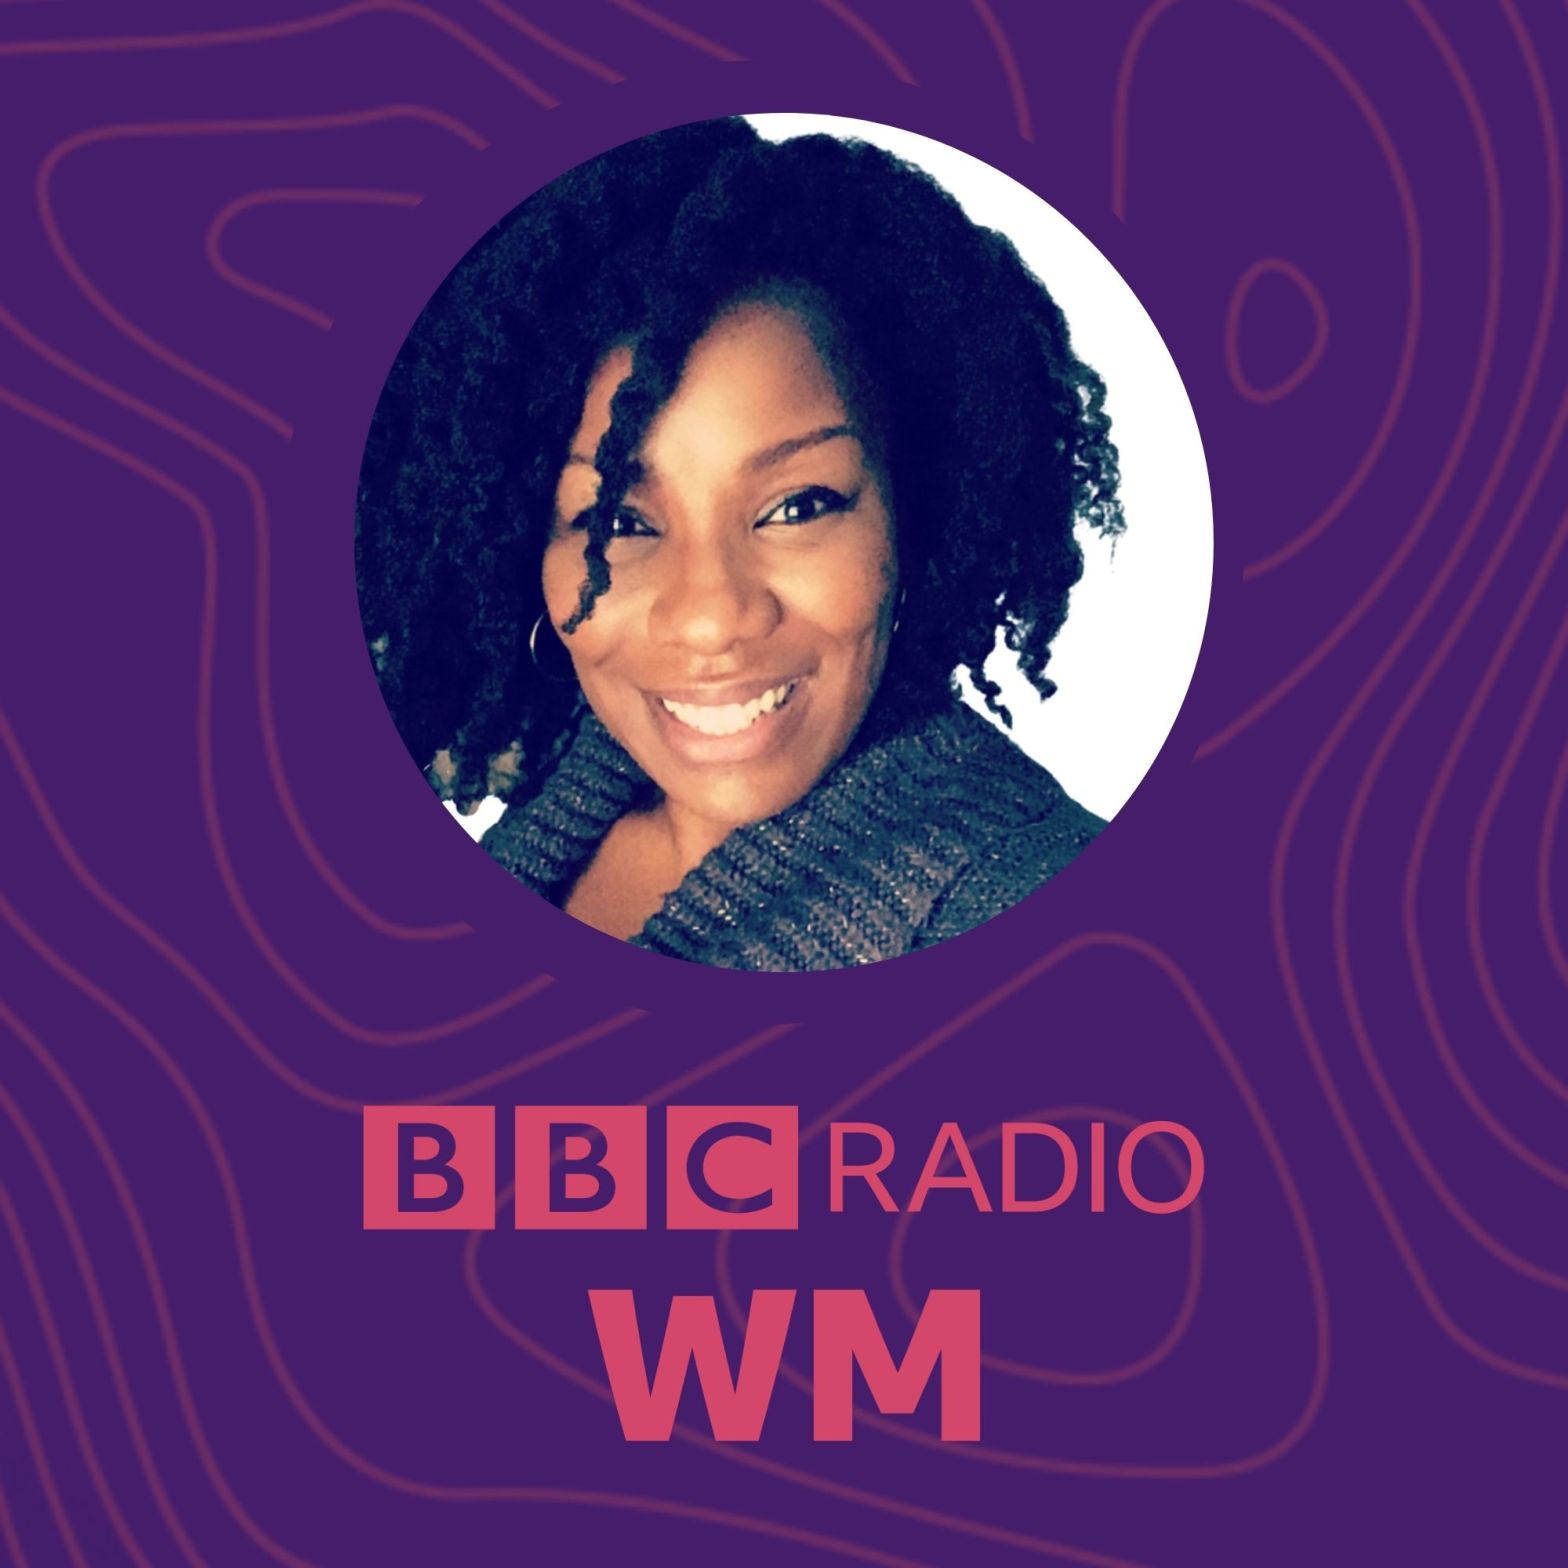 Grace Smith BBC Radio WM female voiceover narrator, presenter, event host. Midlands